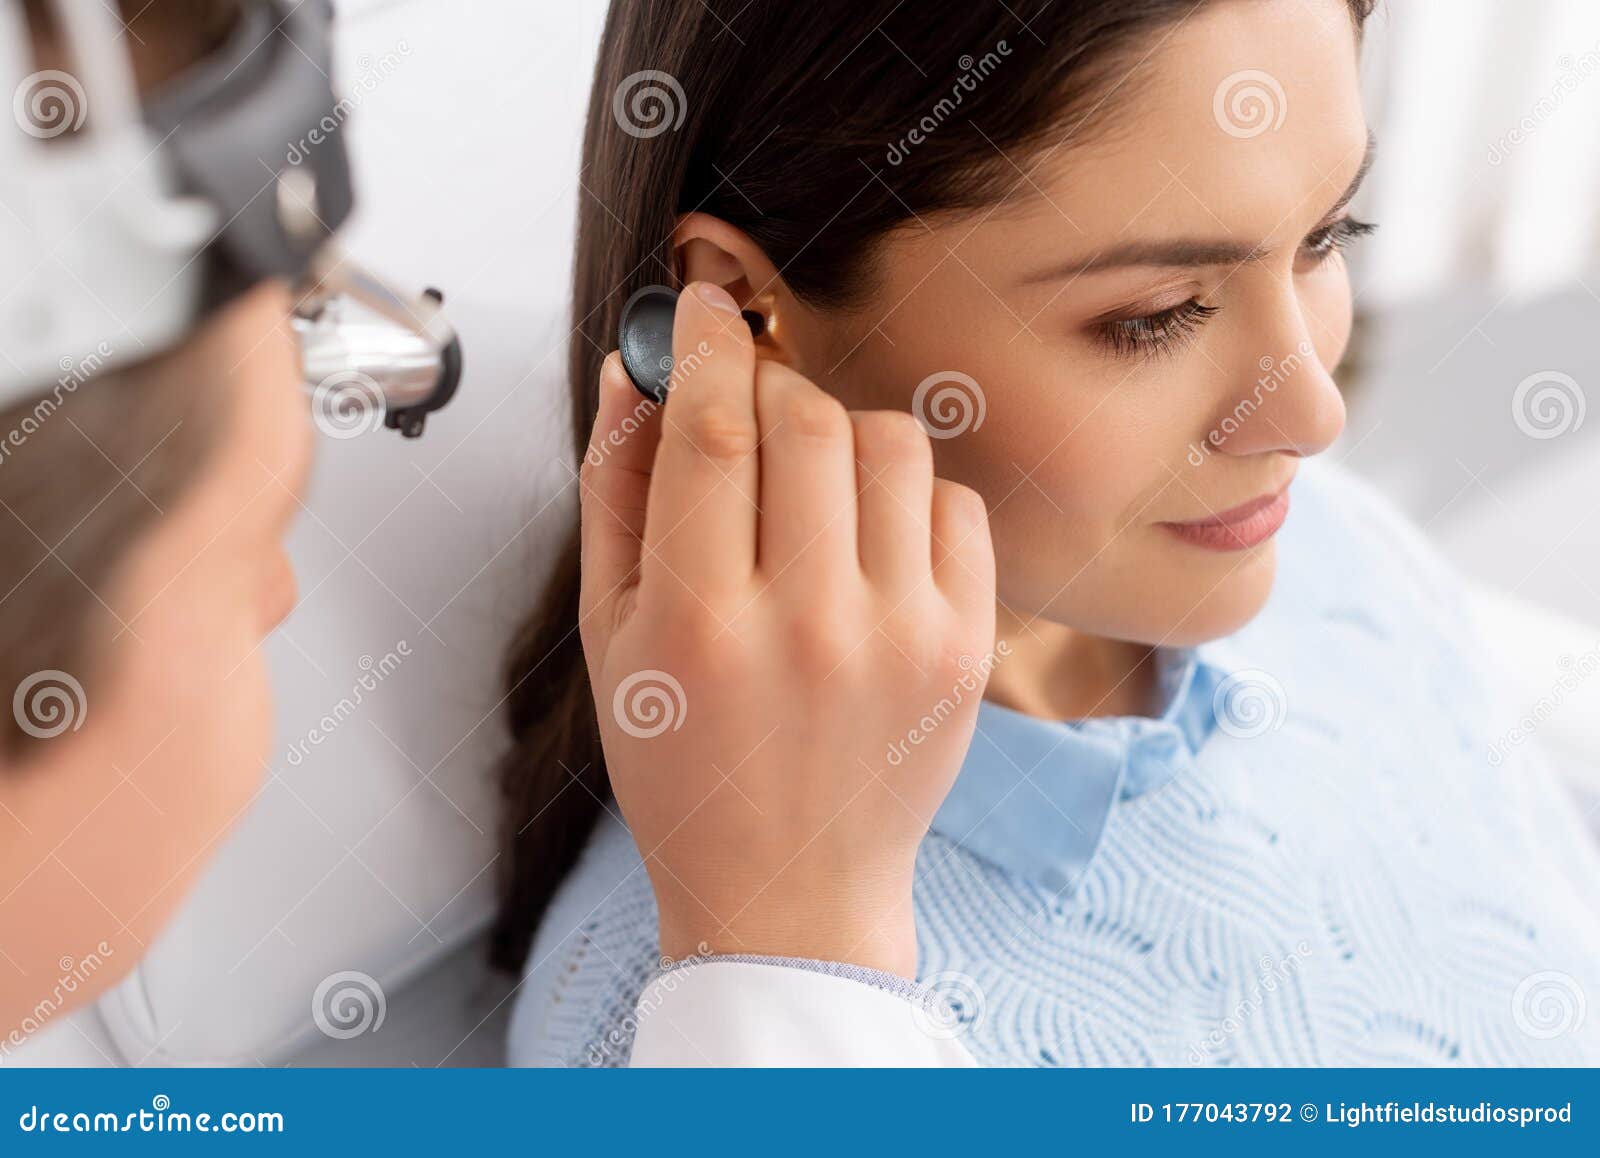 focus of otolaryngologist examining ear of